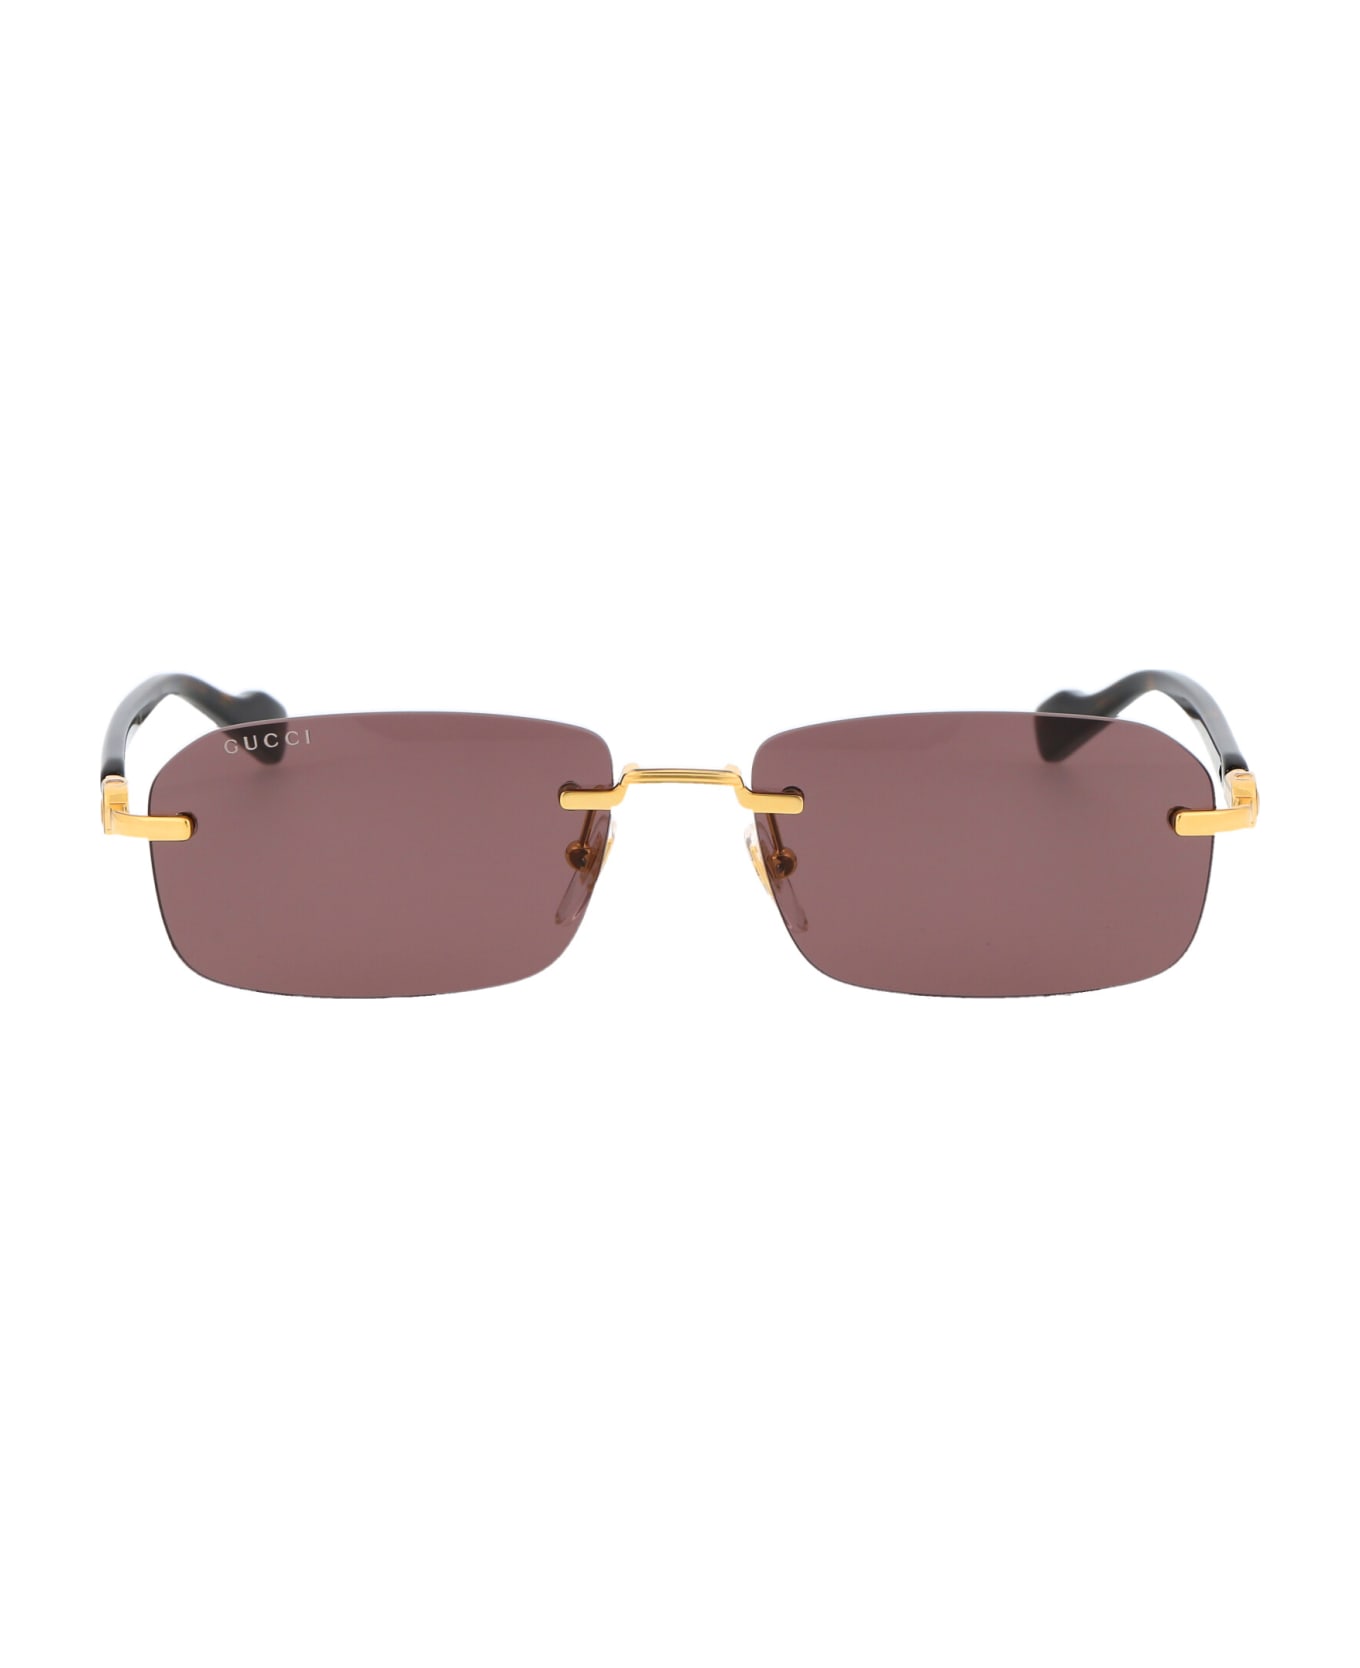 Gucci Eyewear Gg1221s Sunglasses - 002 GOLD HAVANA BROWN サングラス